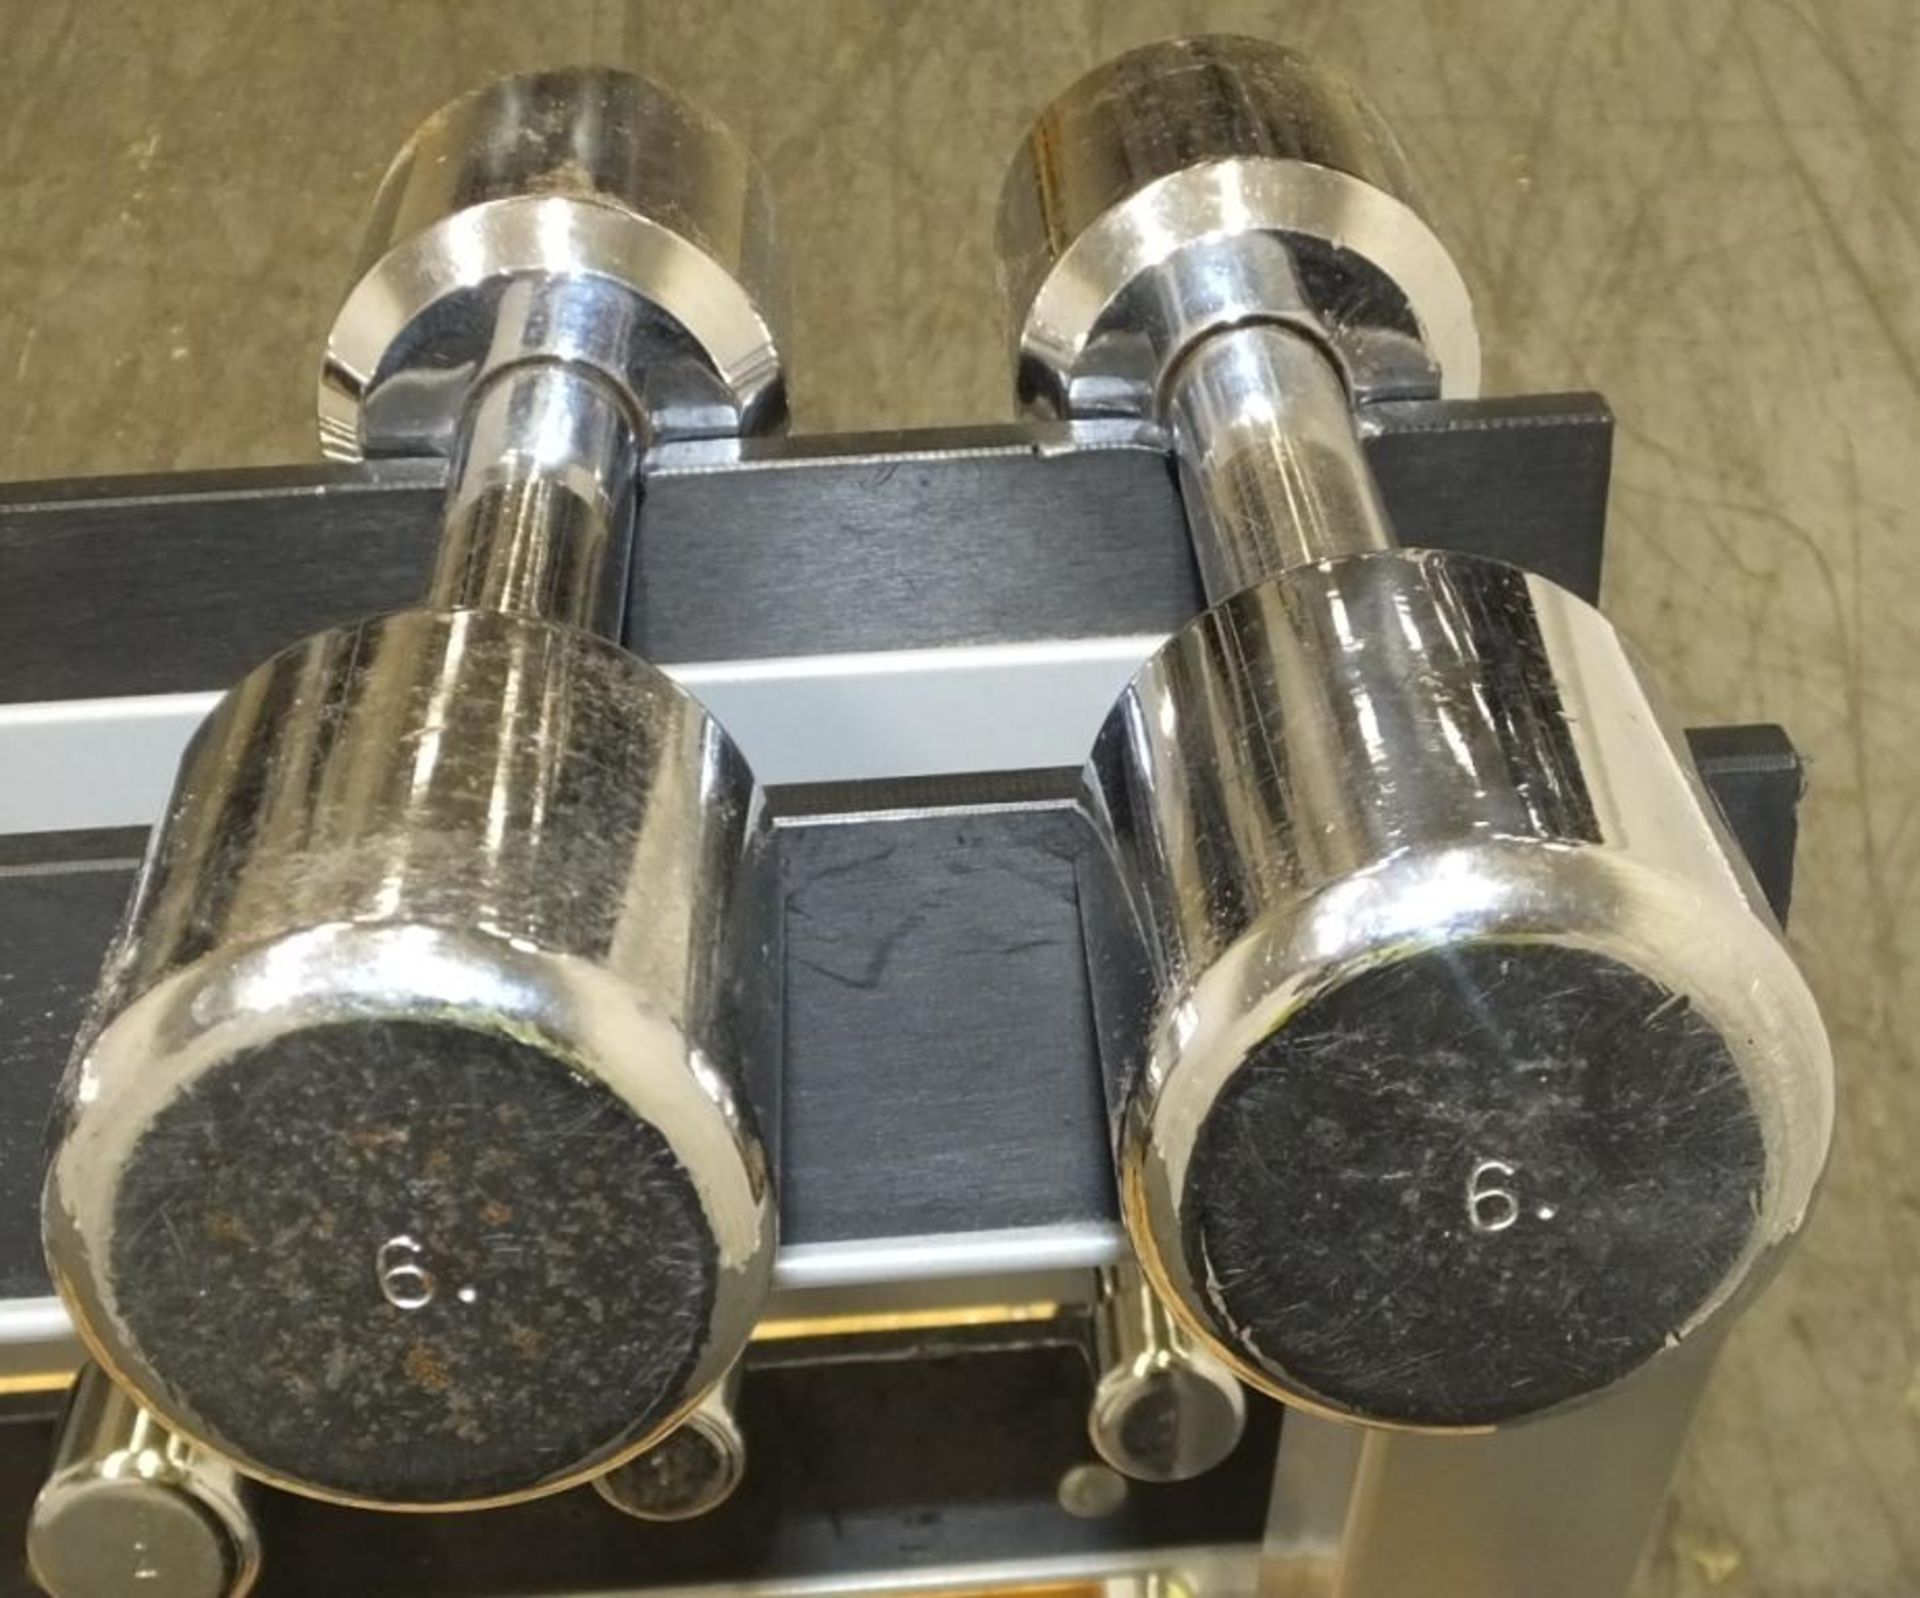 TechnoGym Dumbbell Set 1 -10kg Pairs on Rack - Missing 7kg weights - Image 11 of 15